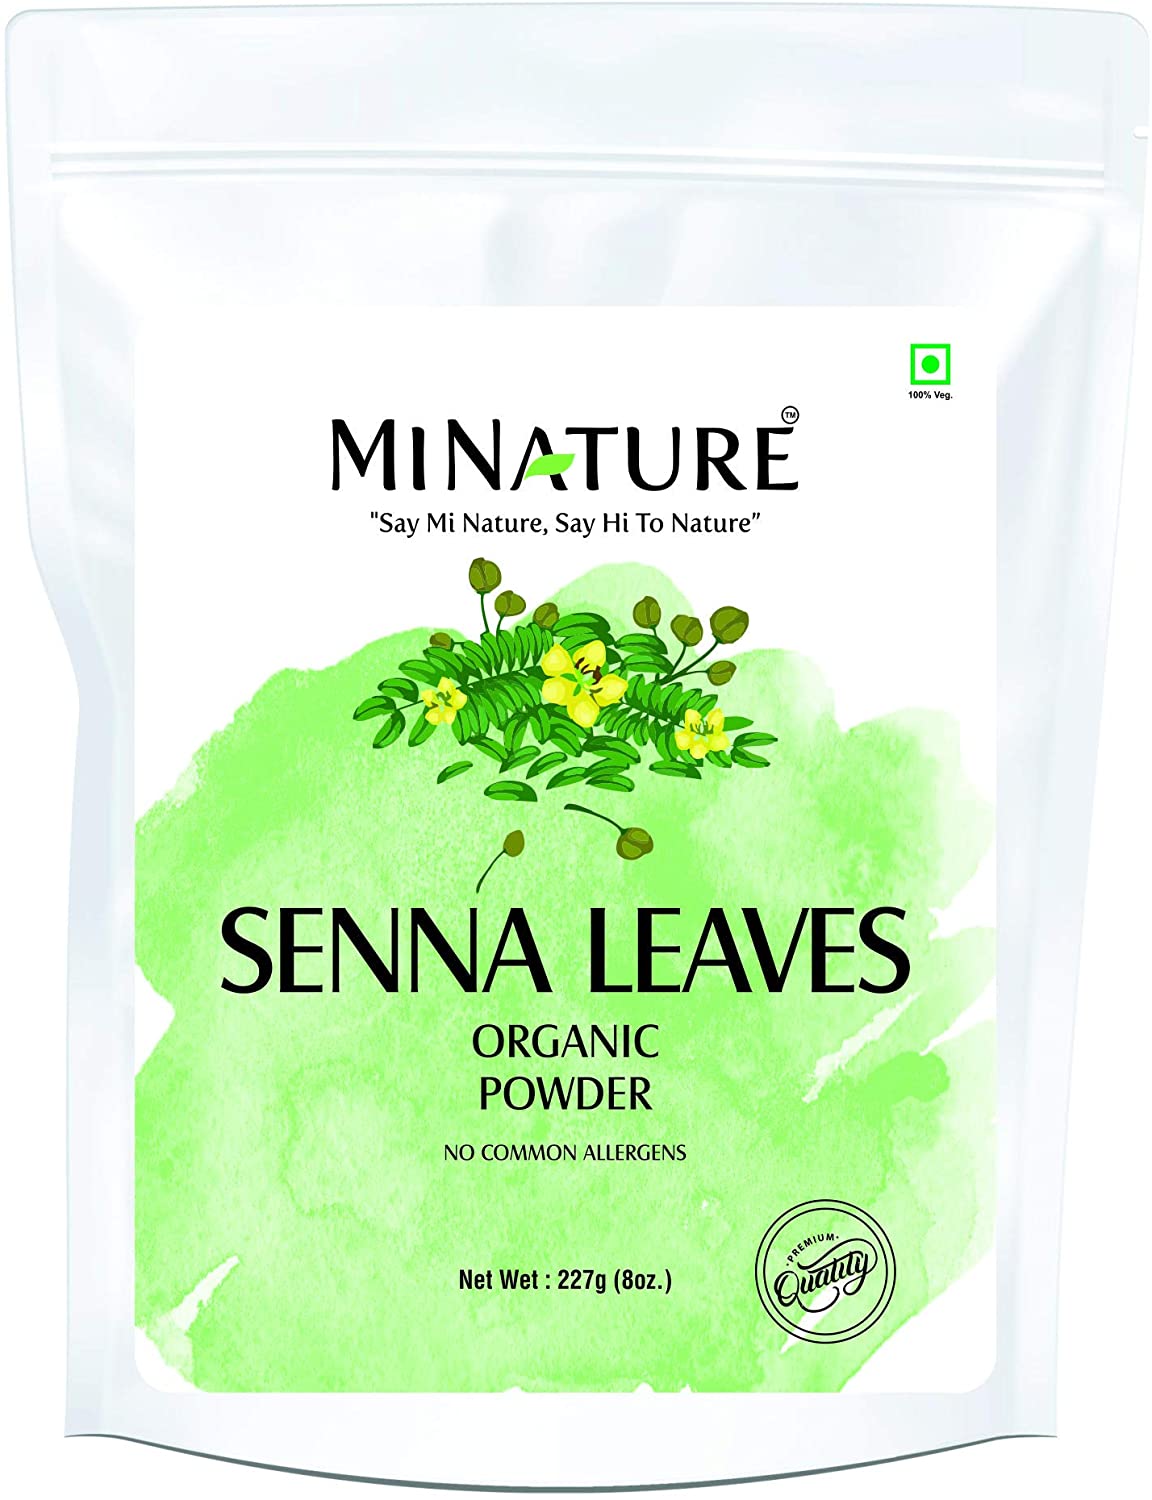 Organic Senna Leaves Powder 227g - USDA CERTIFIED